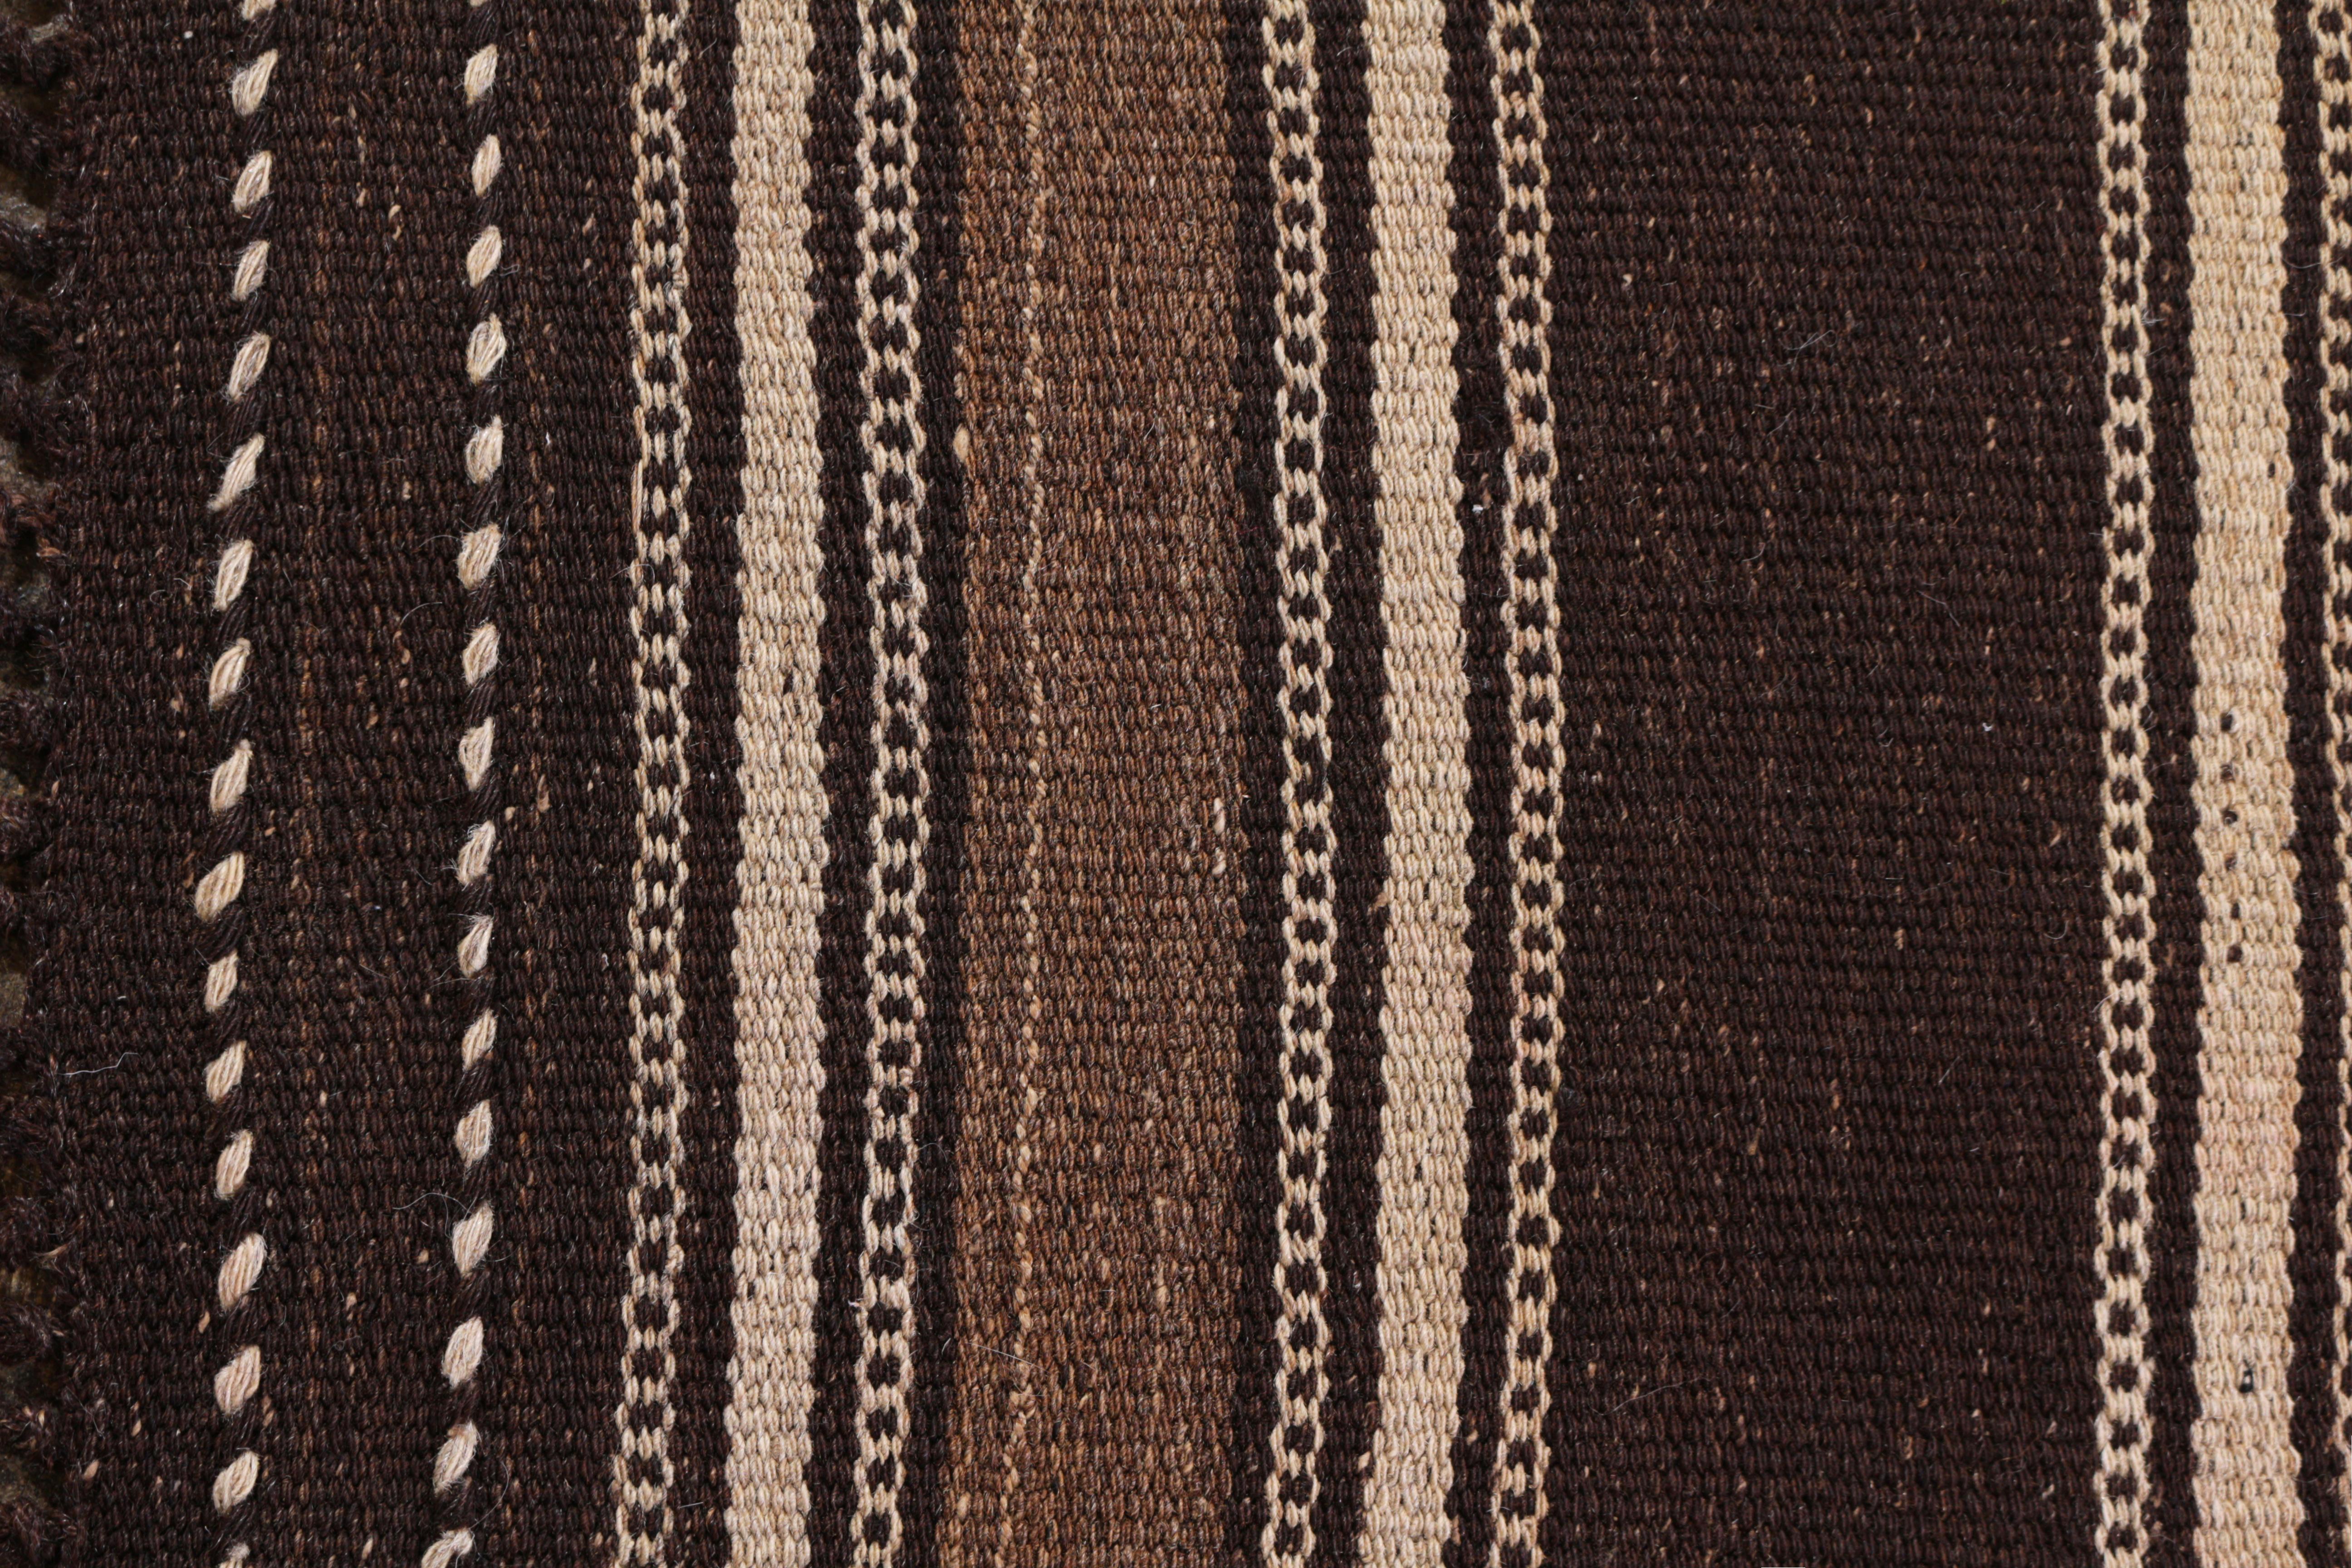 Turkish 1950s Midcentury Kilim Beige Brown Striped Vintage Flat-Weave